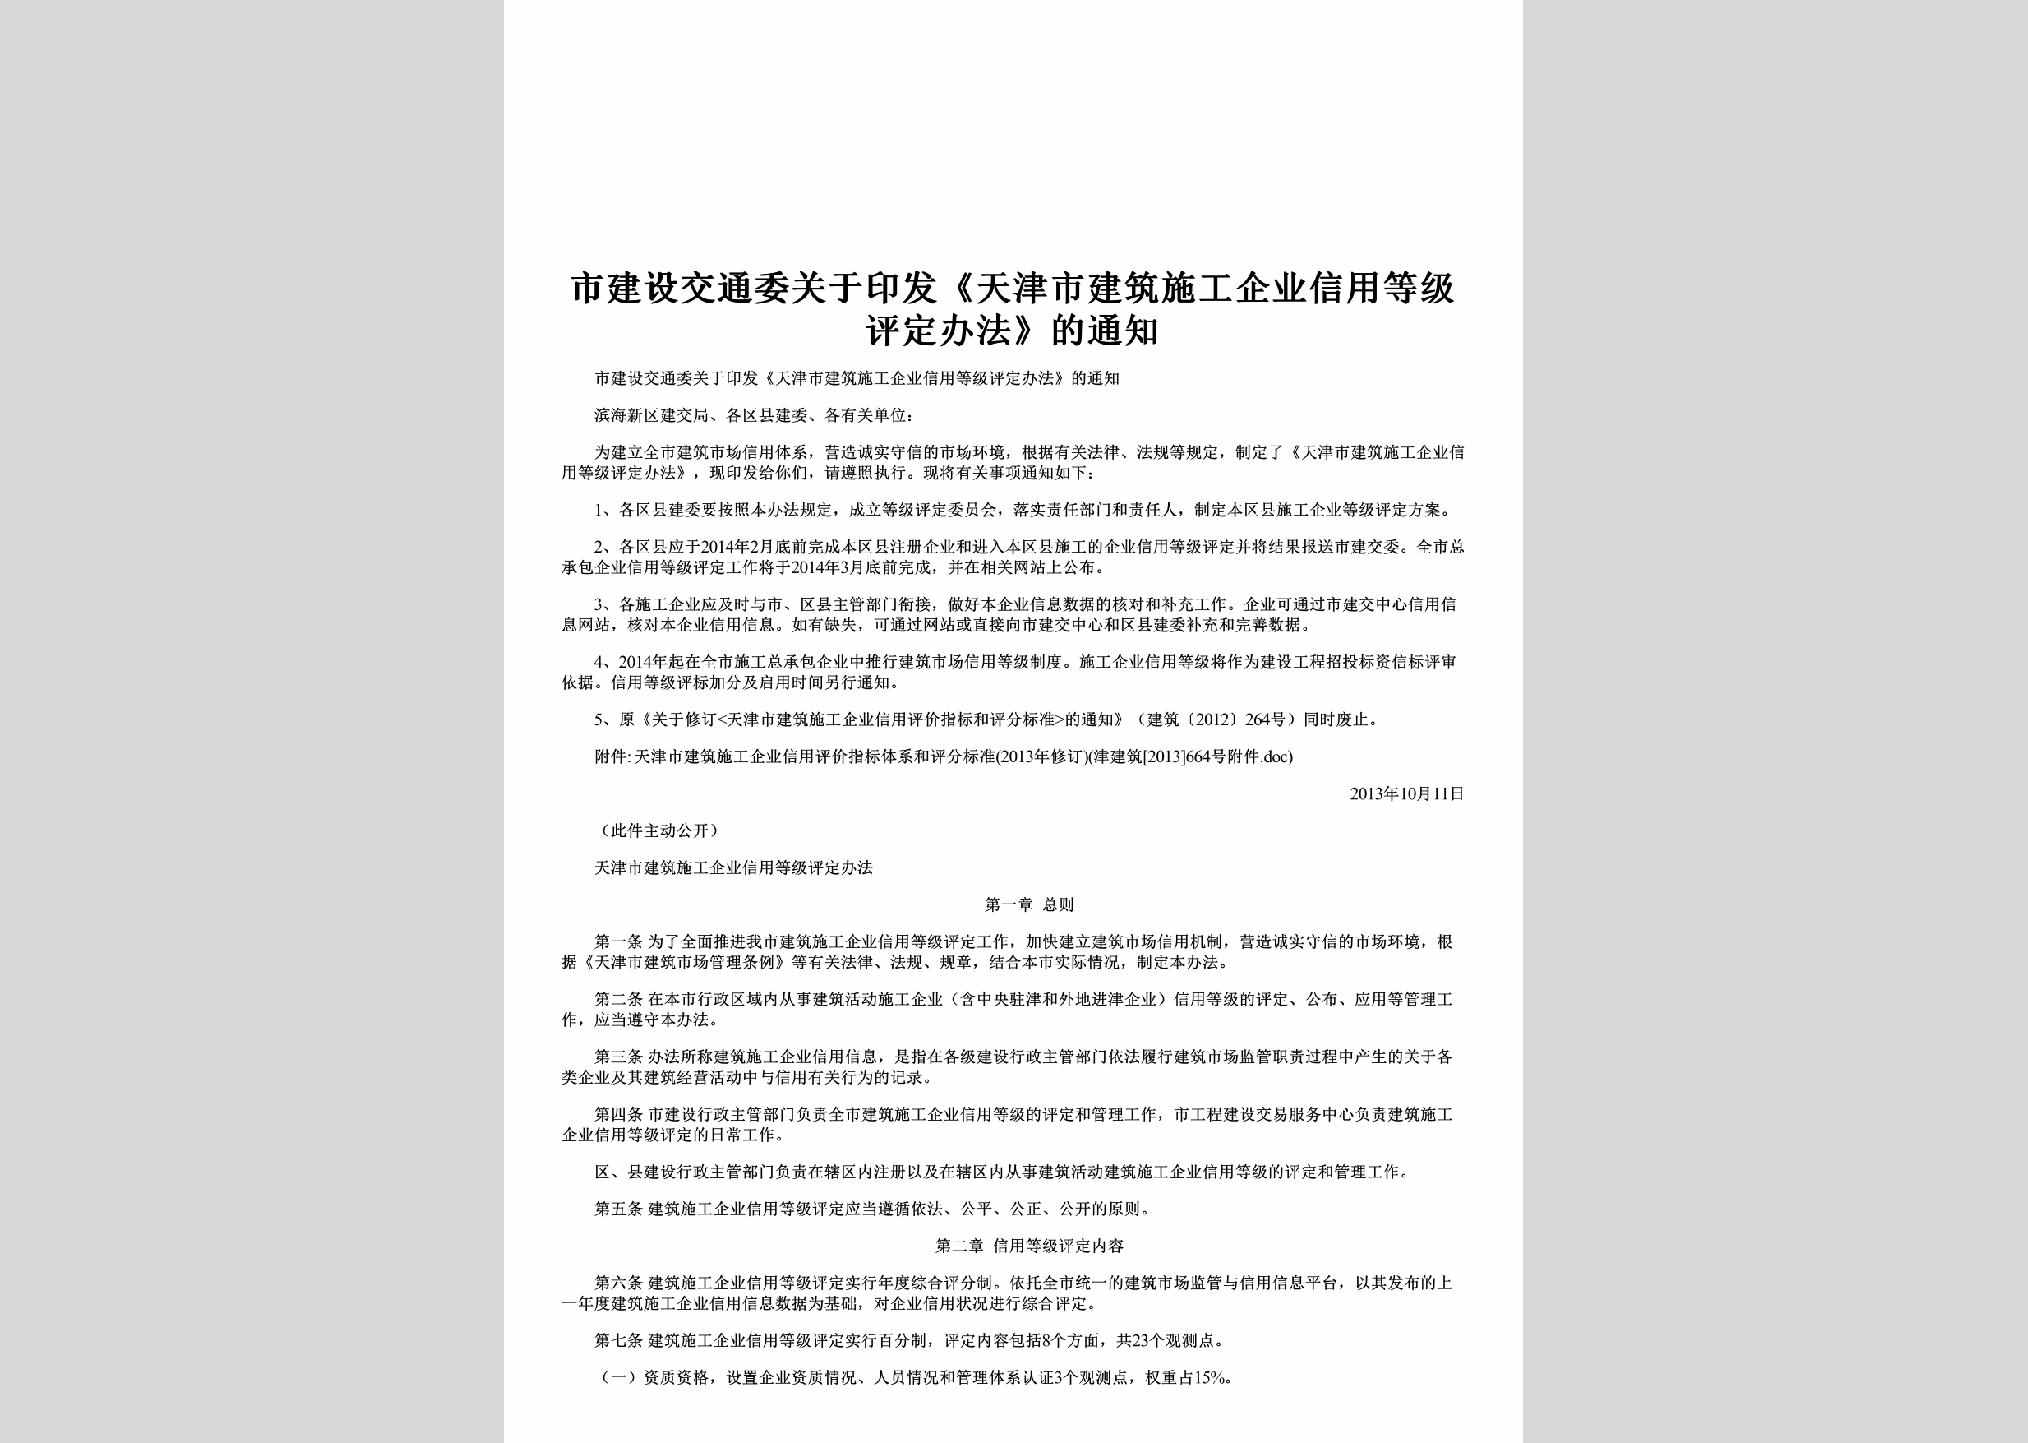 TJ-XYDJPDBF-2013：关于印发《天津市建筑施工企业信用等级评定办法》的通知